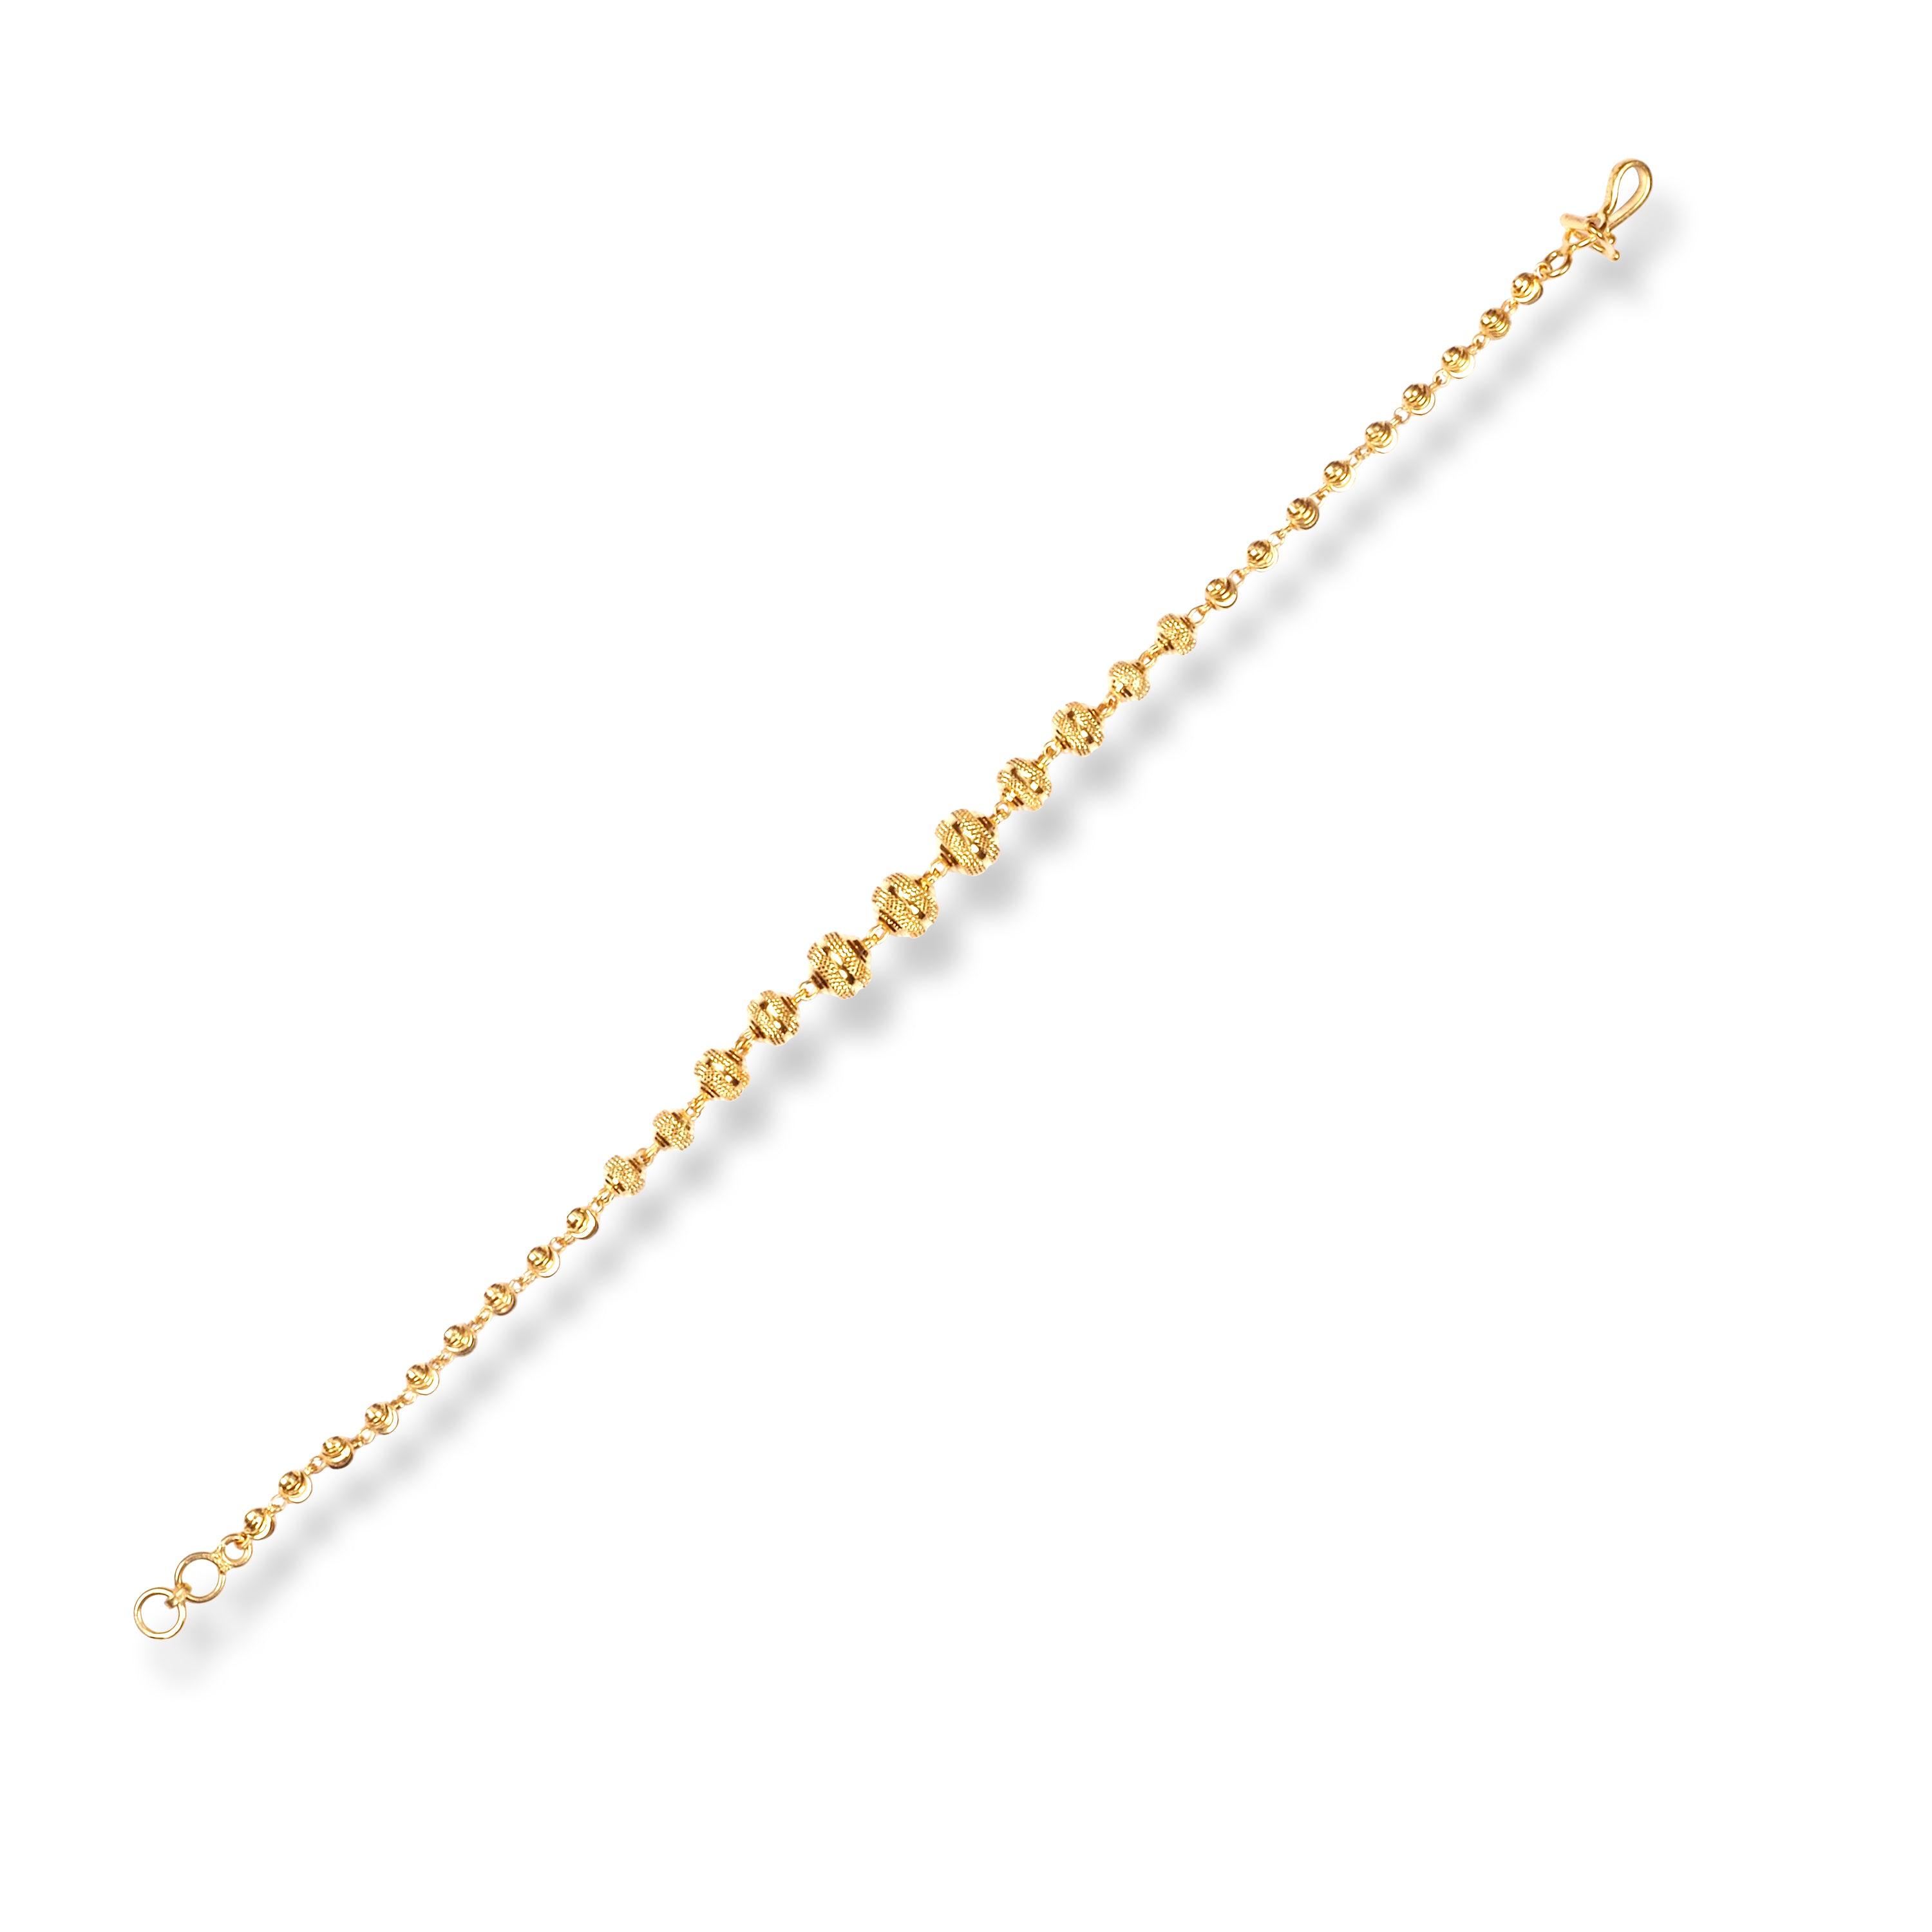 22ct Gold Ladies Bracelet with Diamond Cut Beads & Hook Clasp LBR-7153 - Minar Jewellers